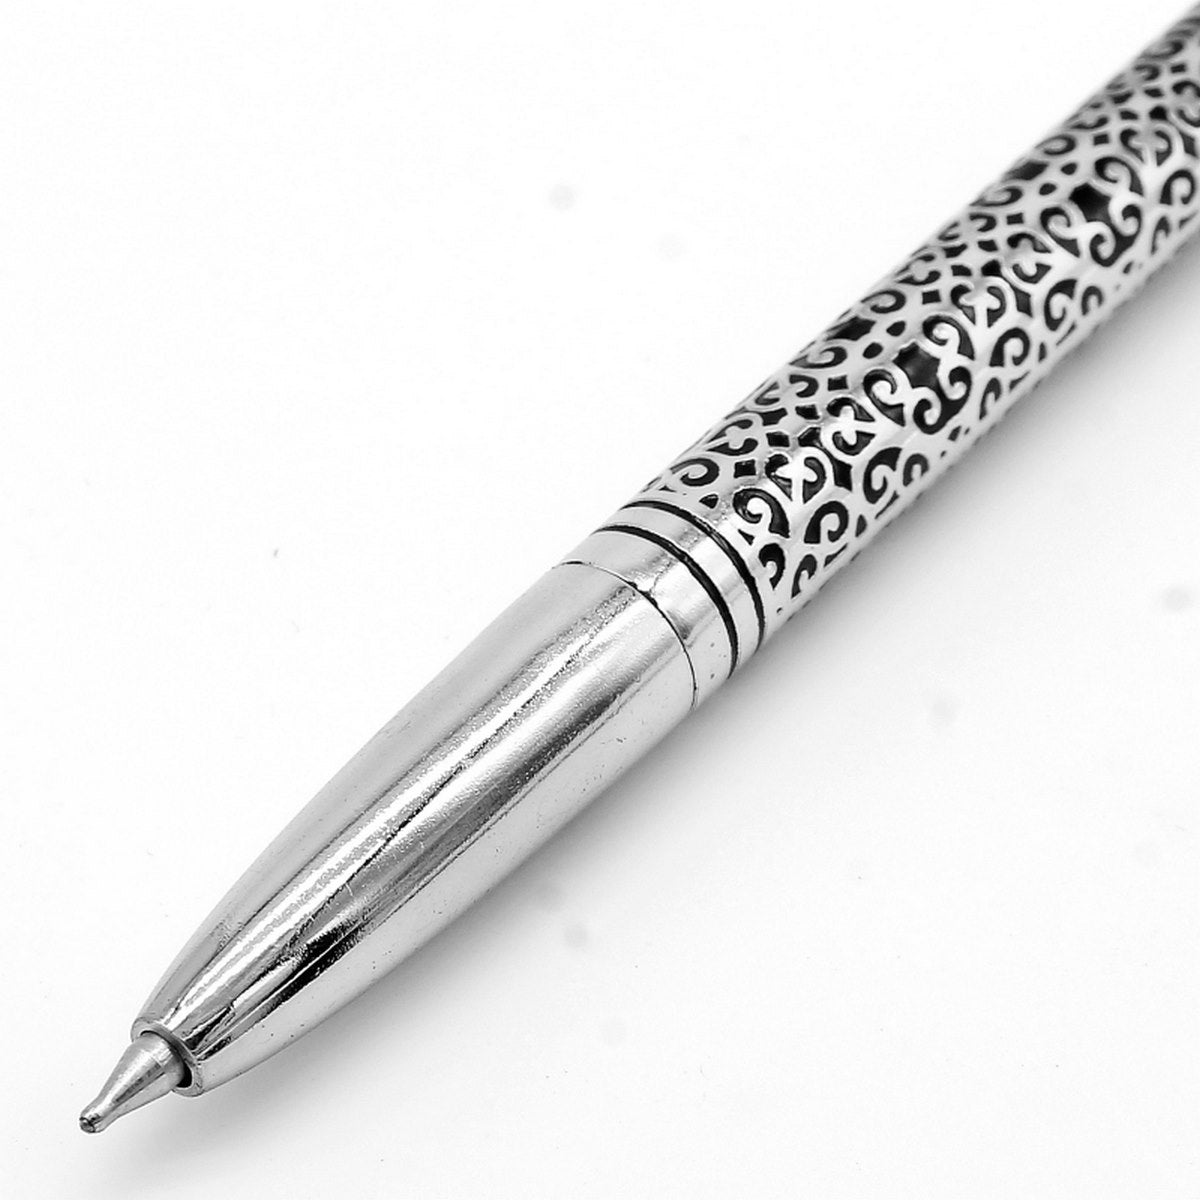 jags-mumbai Feather Pens Feather Ball Pen Steel Finis Body Design